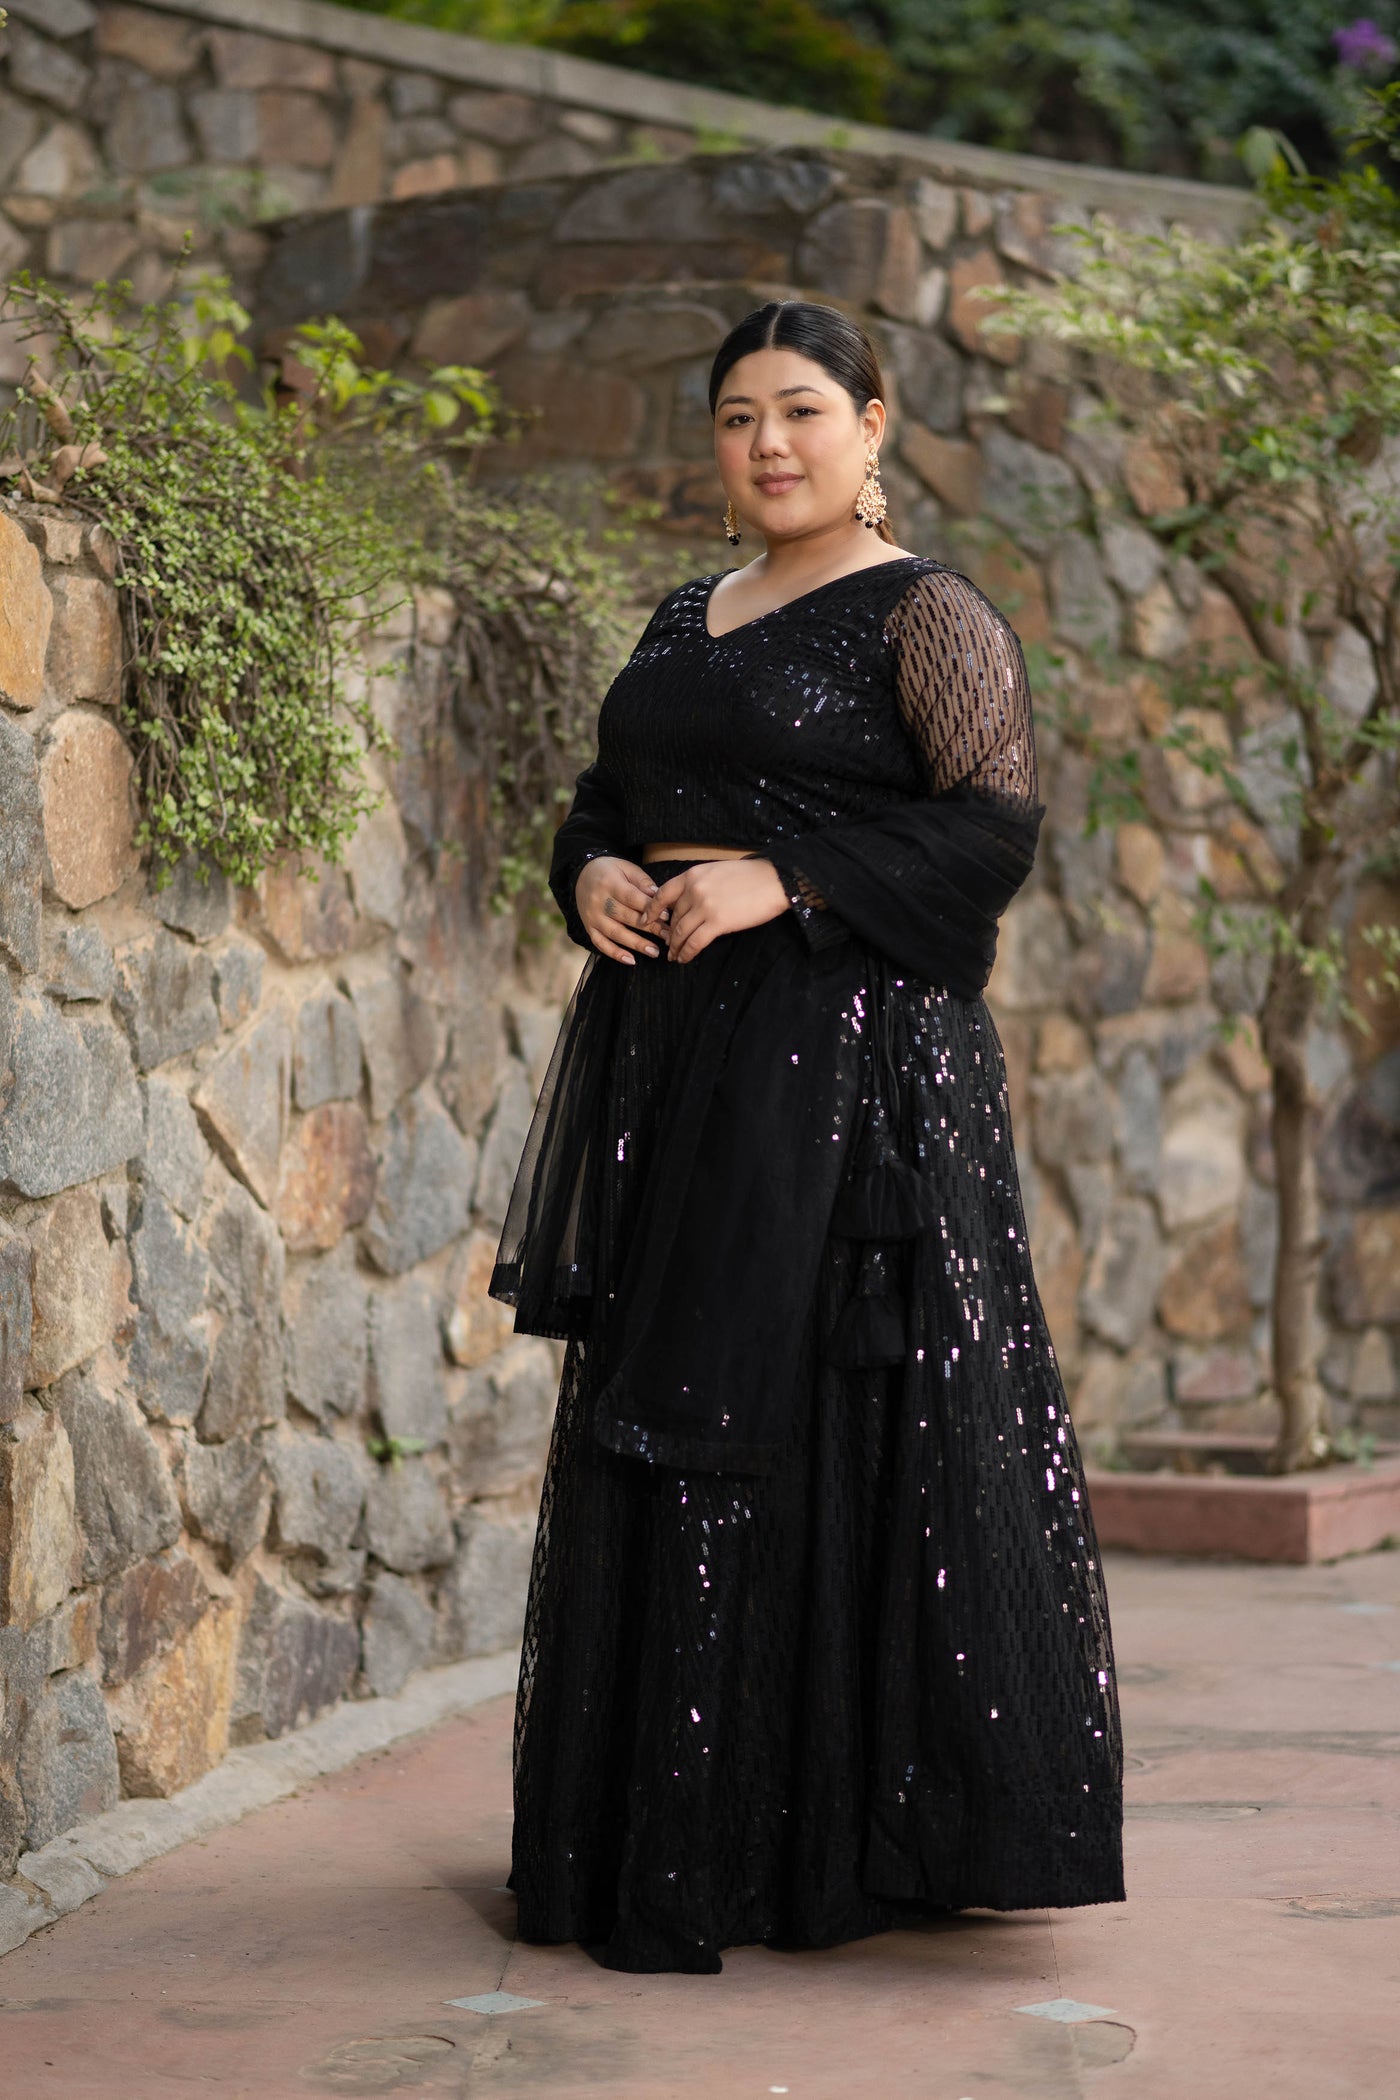 Black Wedding Dresses | POPSUGAR Fashion